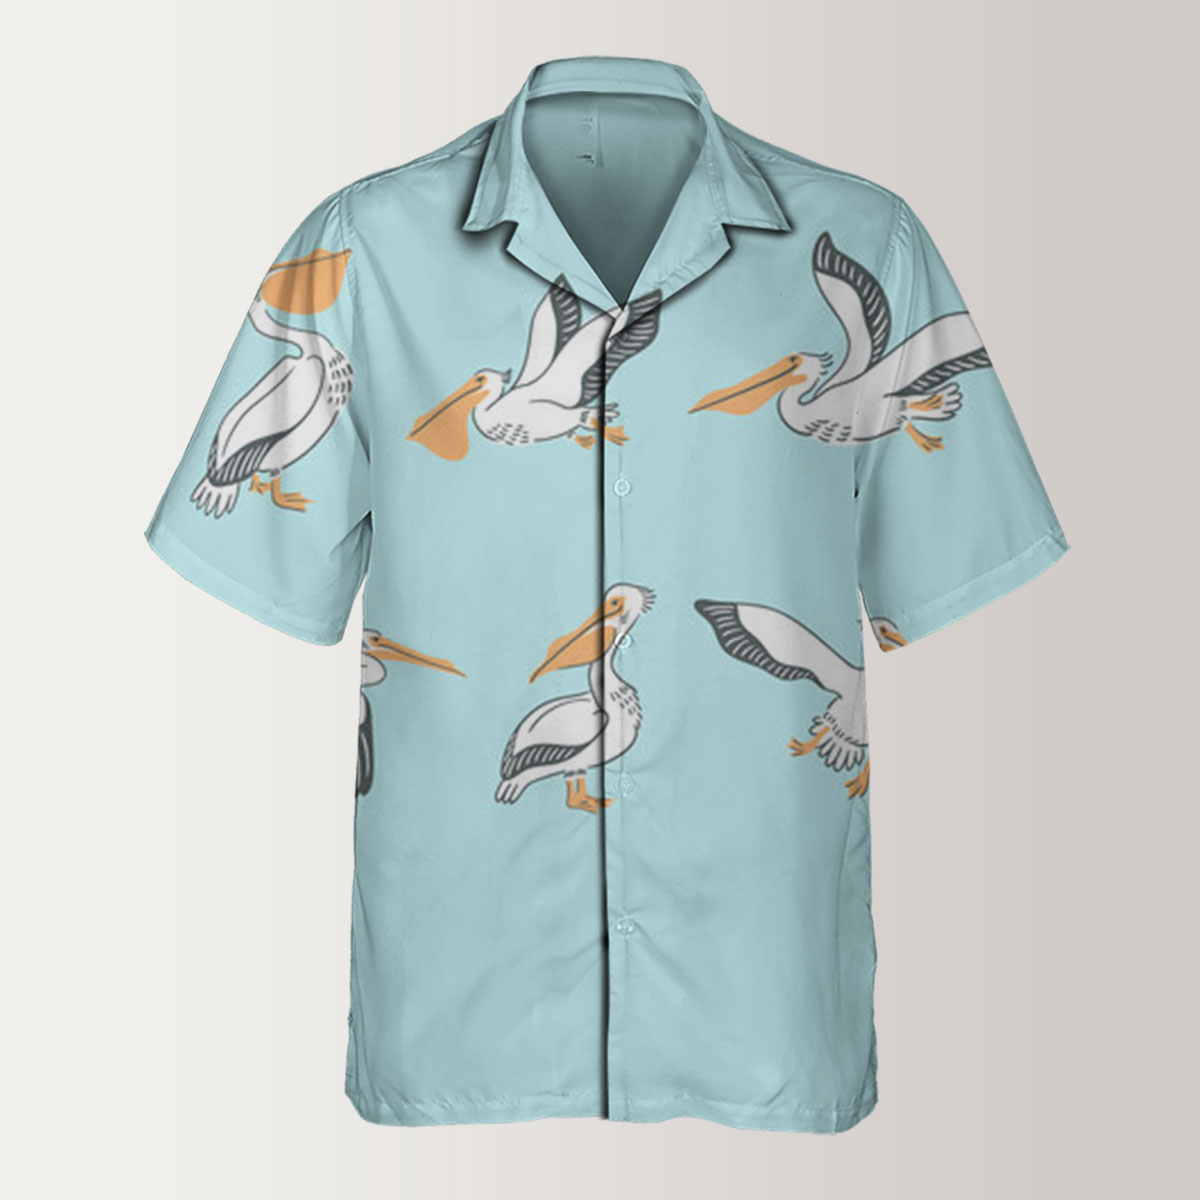 Positions Pelicans Coon Hawaiian Shirt